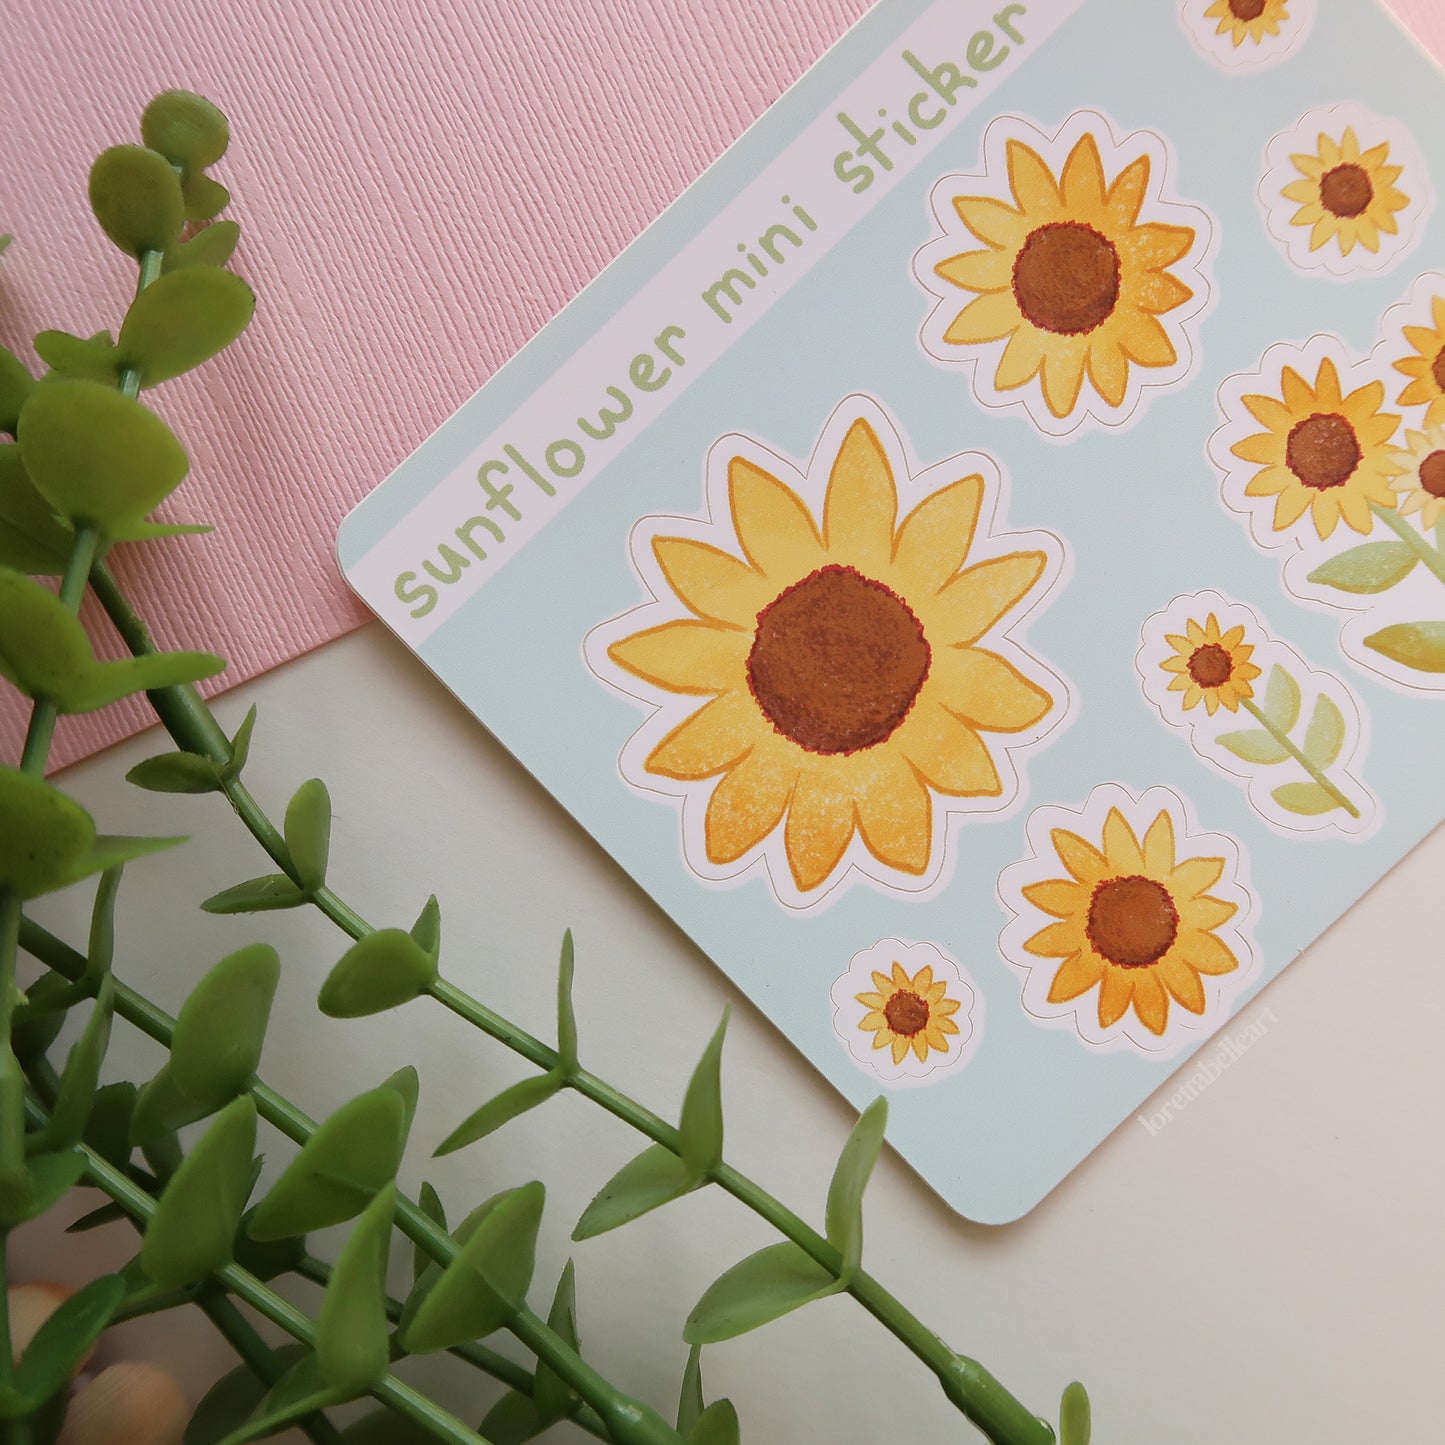 Sunflowers Mini Sticker Sheet